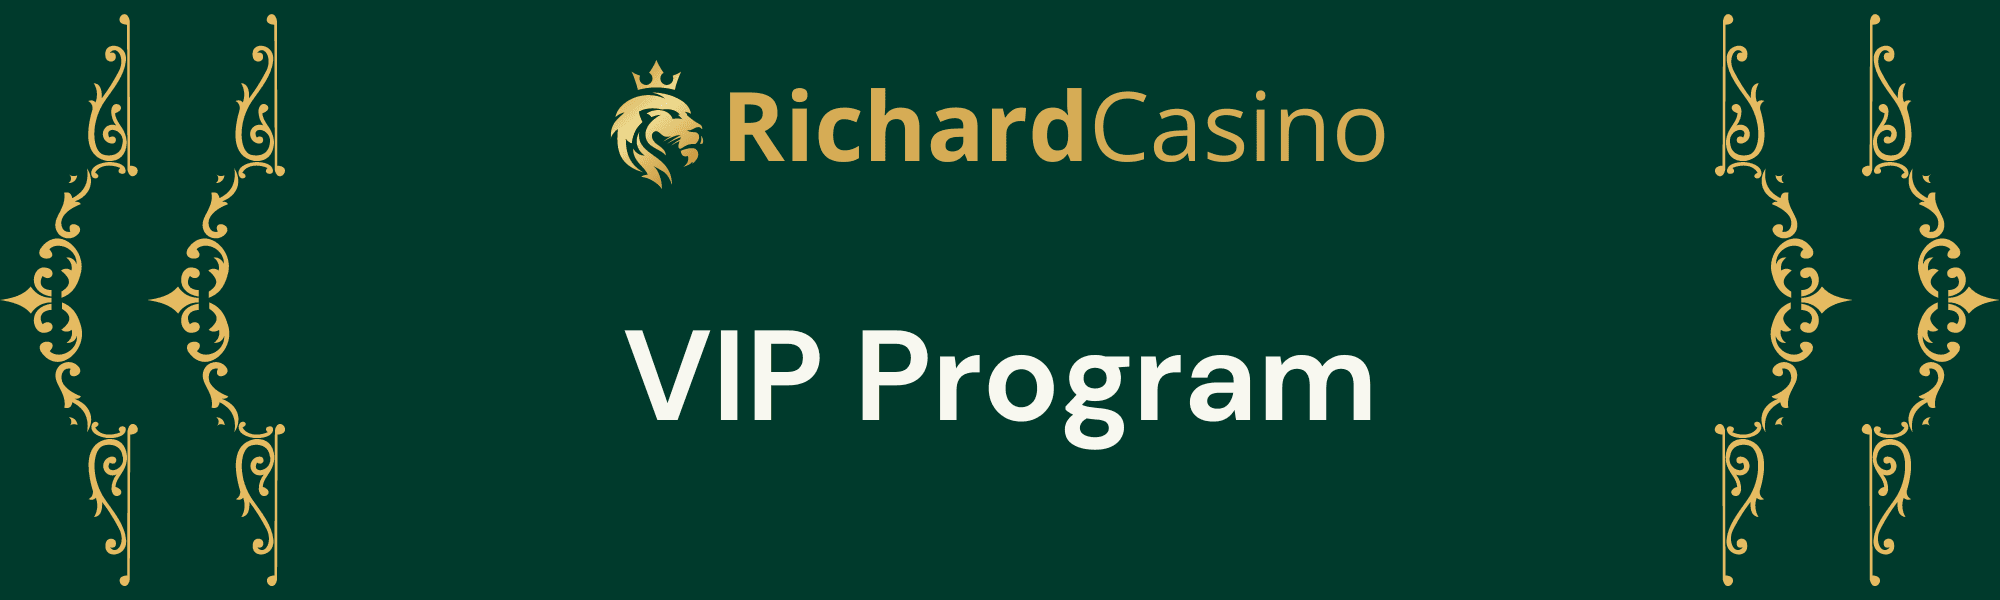 Richard Casino VIP Program.png